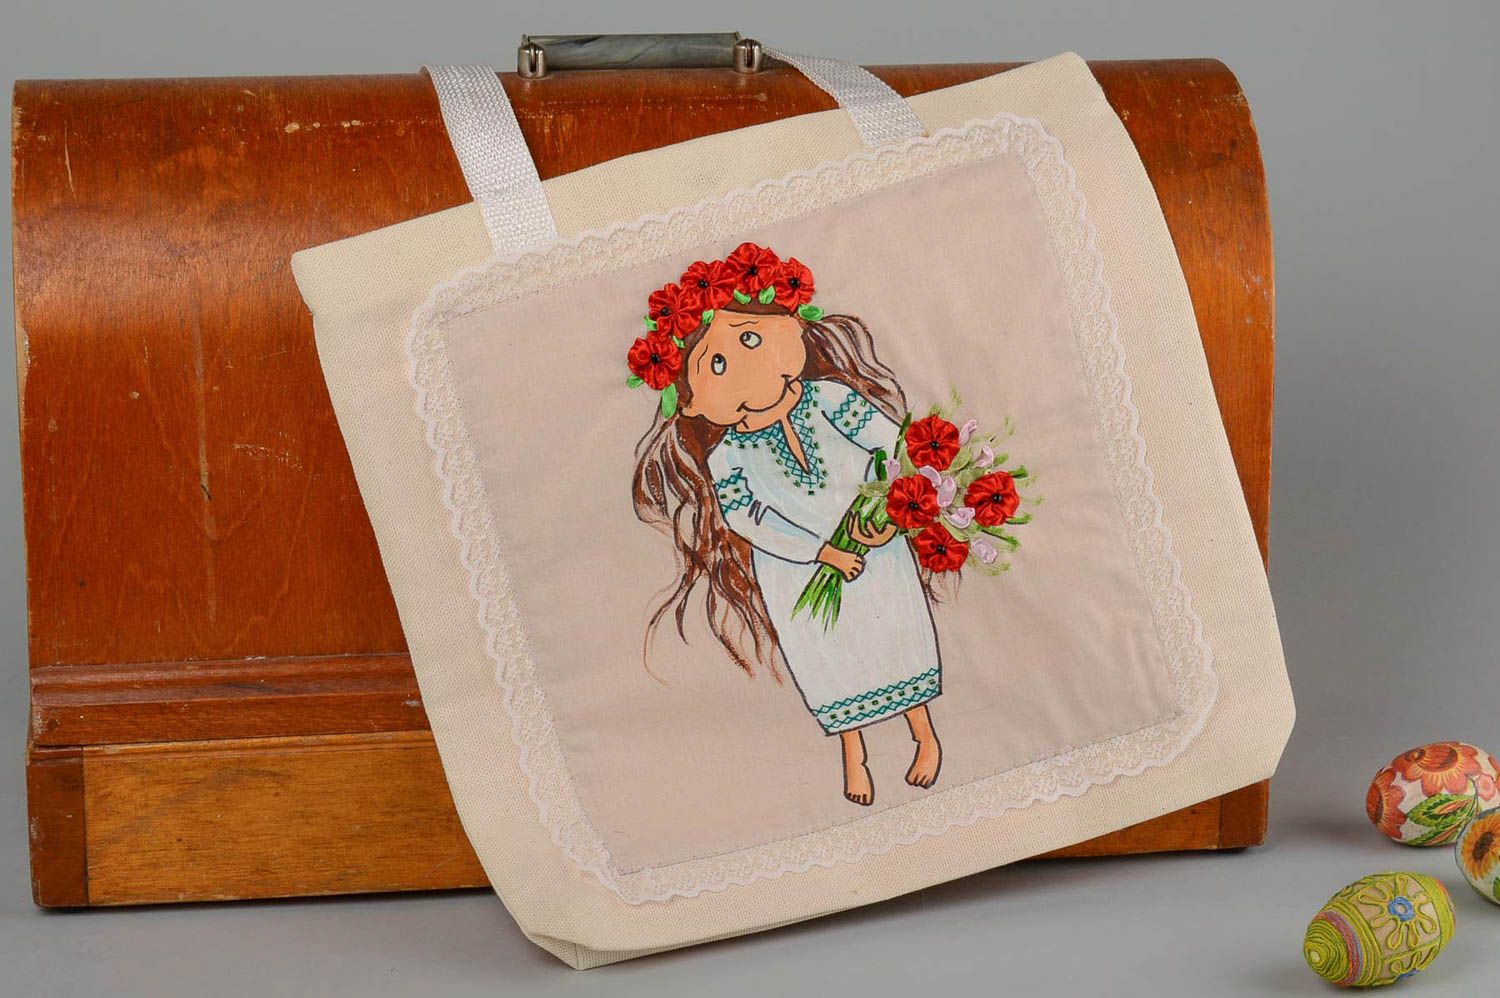 Handmade bag unusual handbag designer bag for girls gift ideas unusual gift photo 1